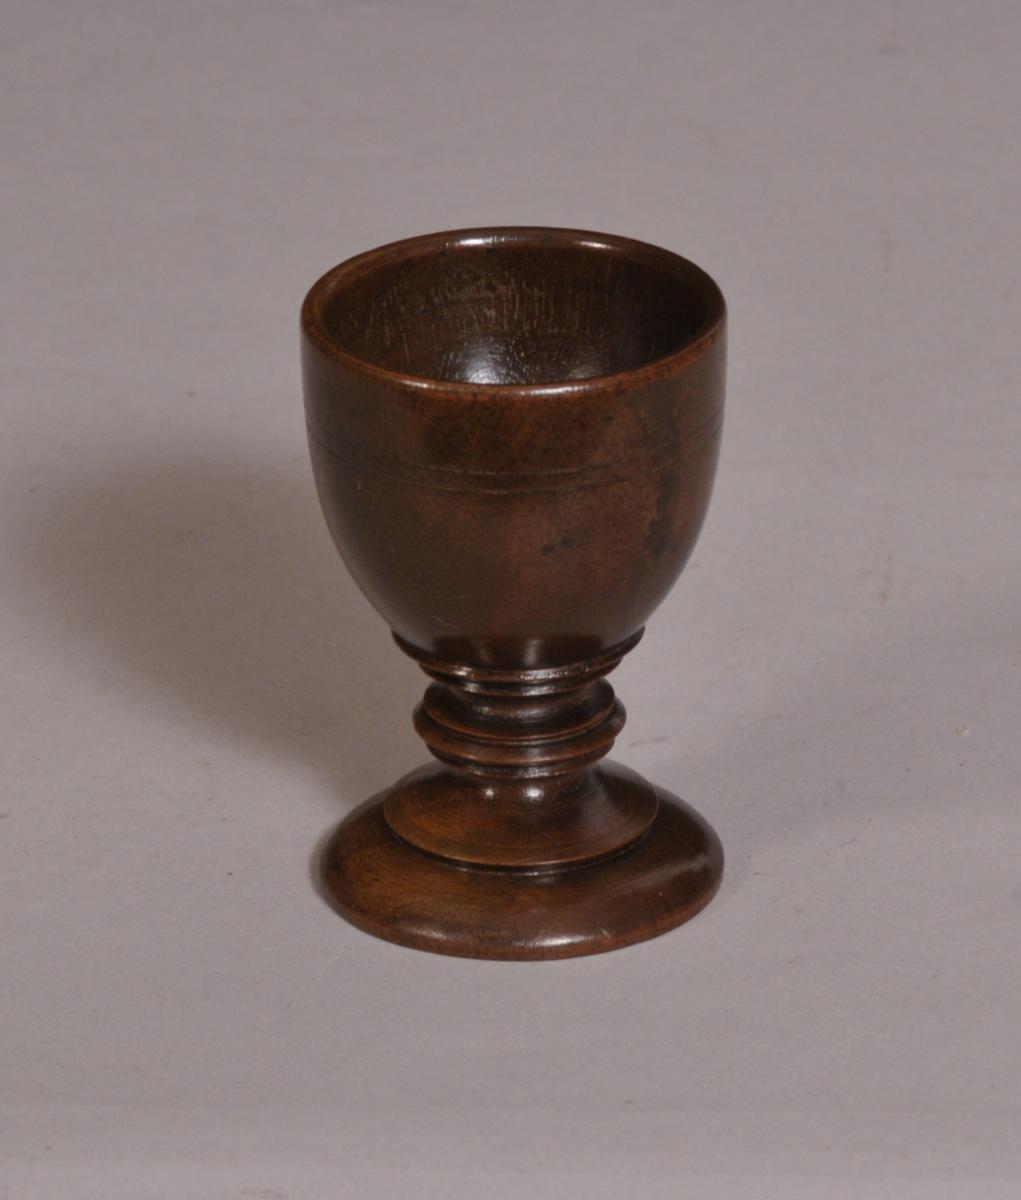 S/3739 Antique Treen 19th Century Mahogany Egg Cup